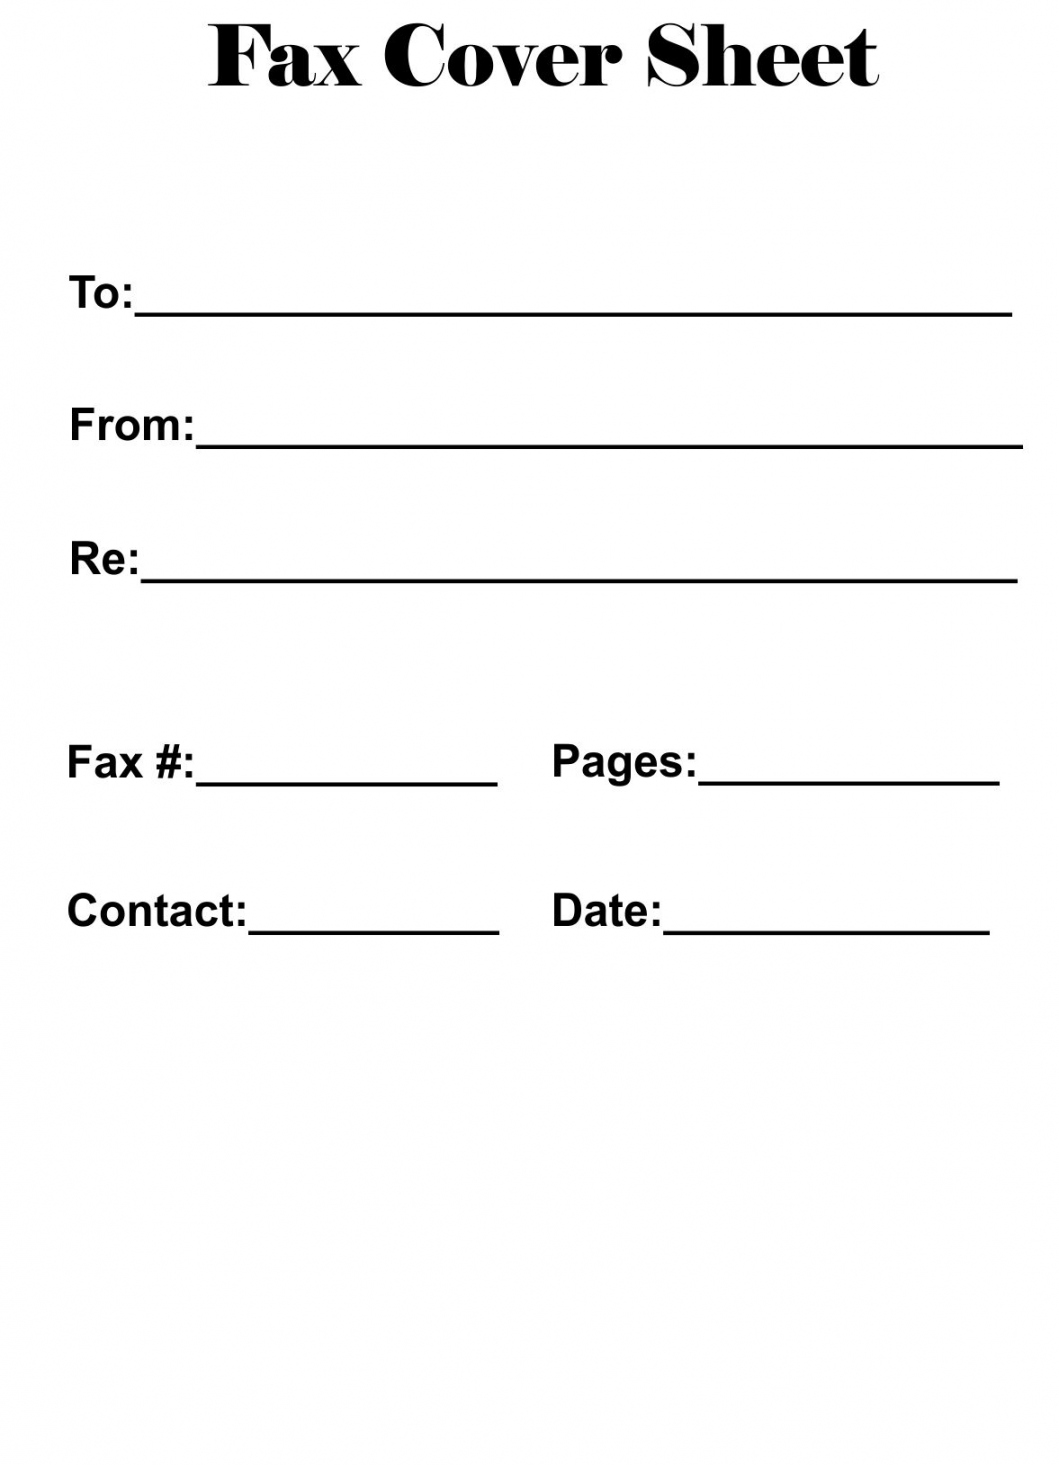 Fax Cover Sheets Free Printable - Printable - Fancy Fax Cover Sheet Template  Fax cover sheet, Cover sheet